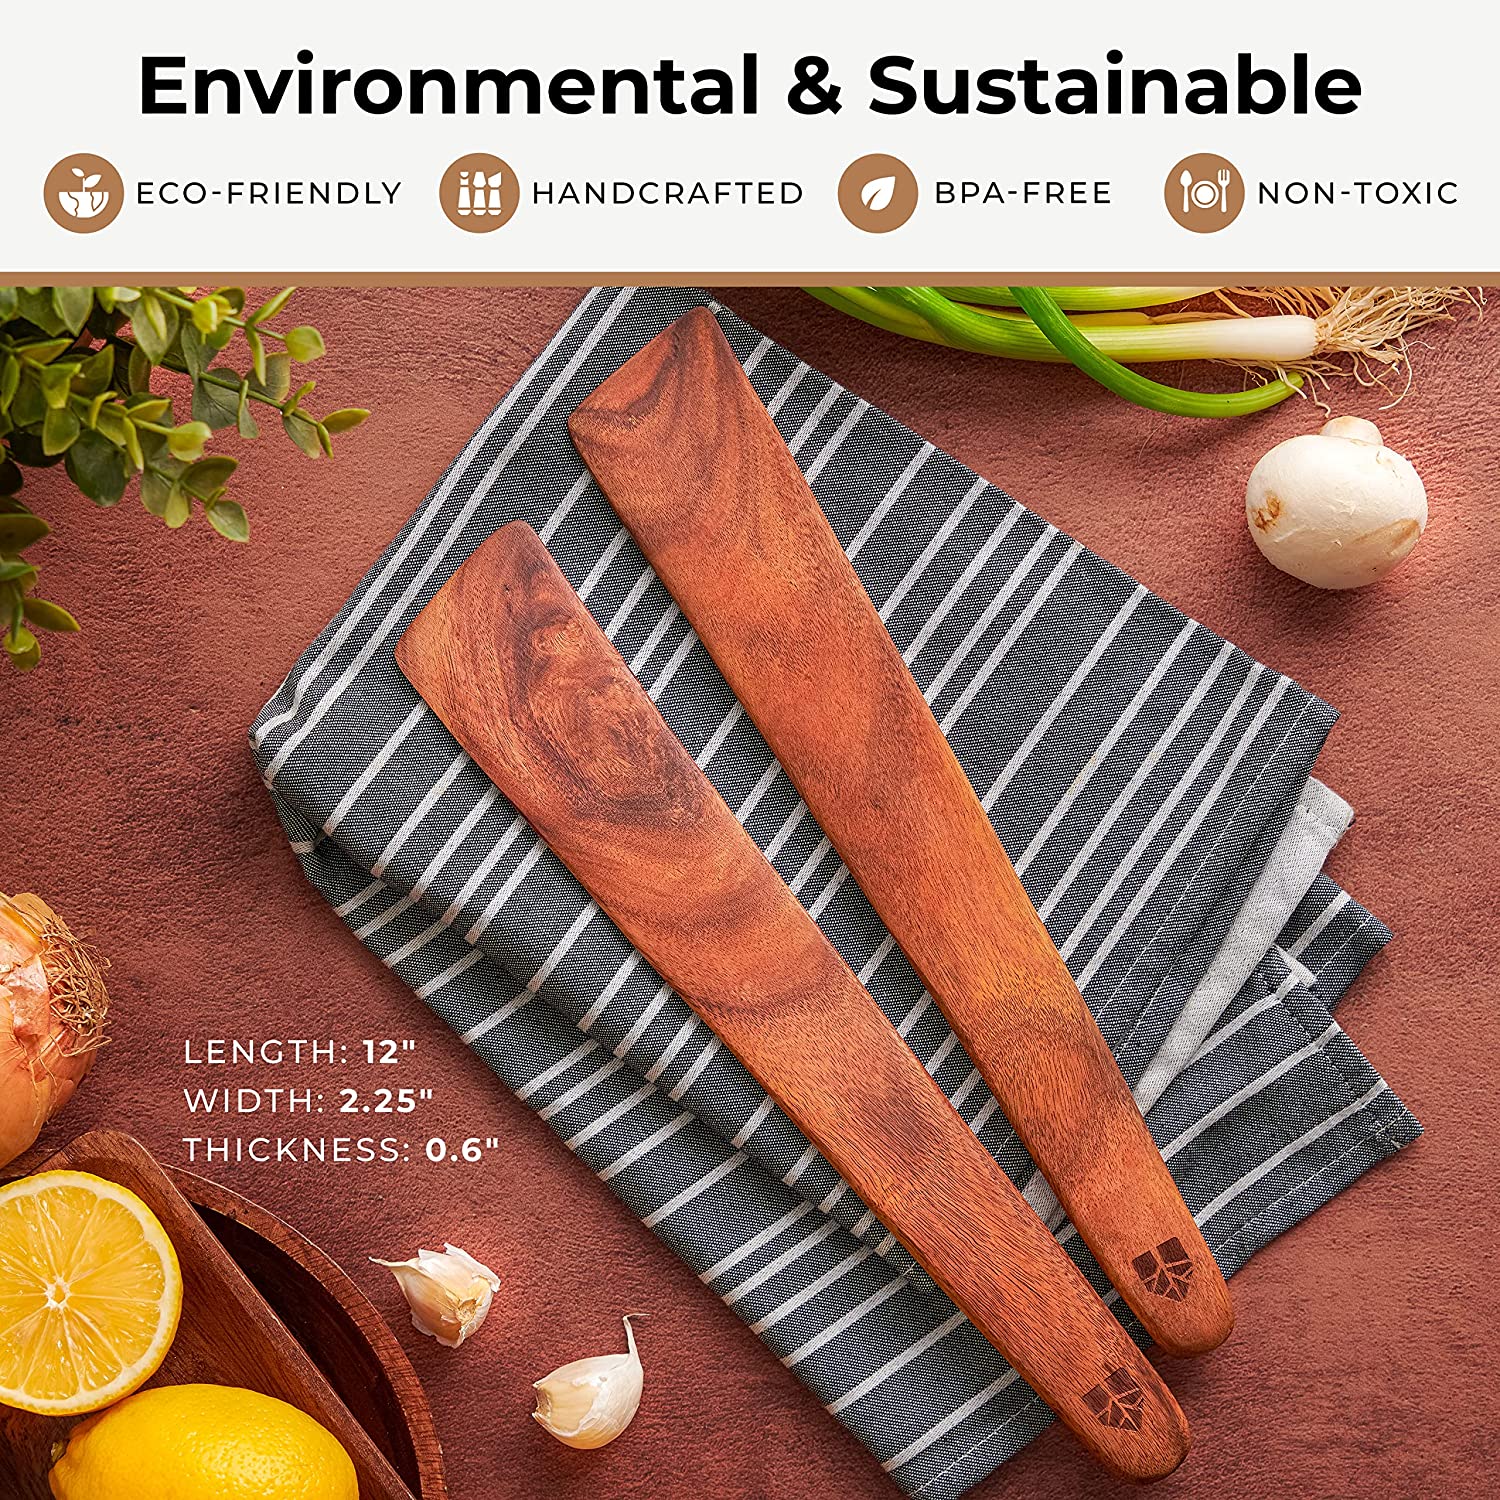 Wooden Spatula for Cooking, Kitchen Set of 4, Natural Teak Wooden Utensils  including Paddle, Turner …See more Wooden Spatula for Cooking, Kitchen Set